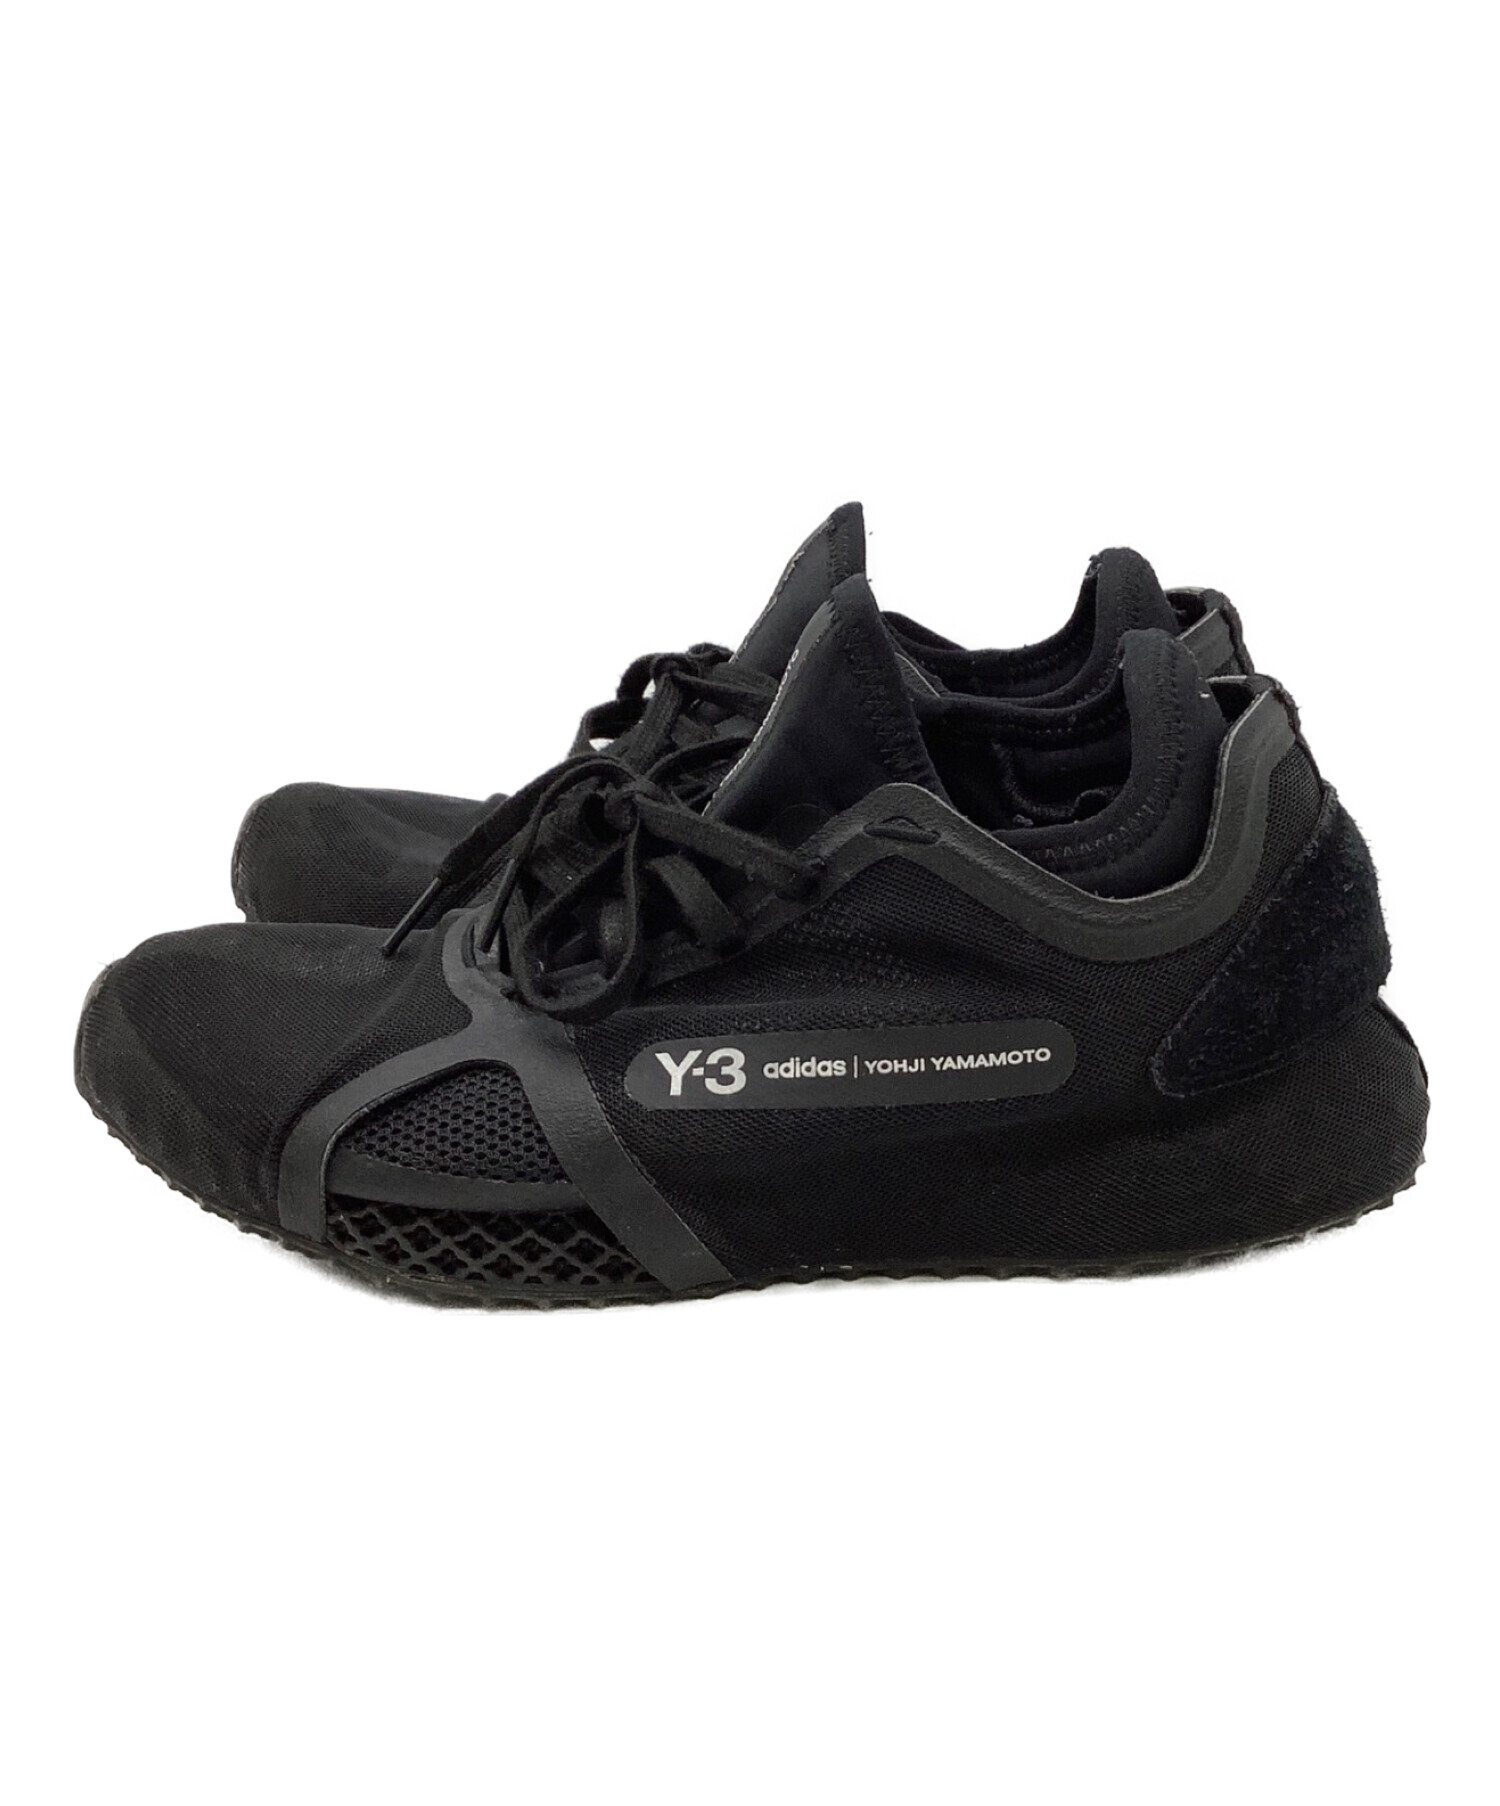 adidas (アディダス) YOHJI YAMAMOTO (ヨウジヤマモト) ローカットスニーカー ブラック サイズ:26cm